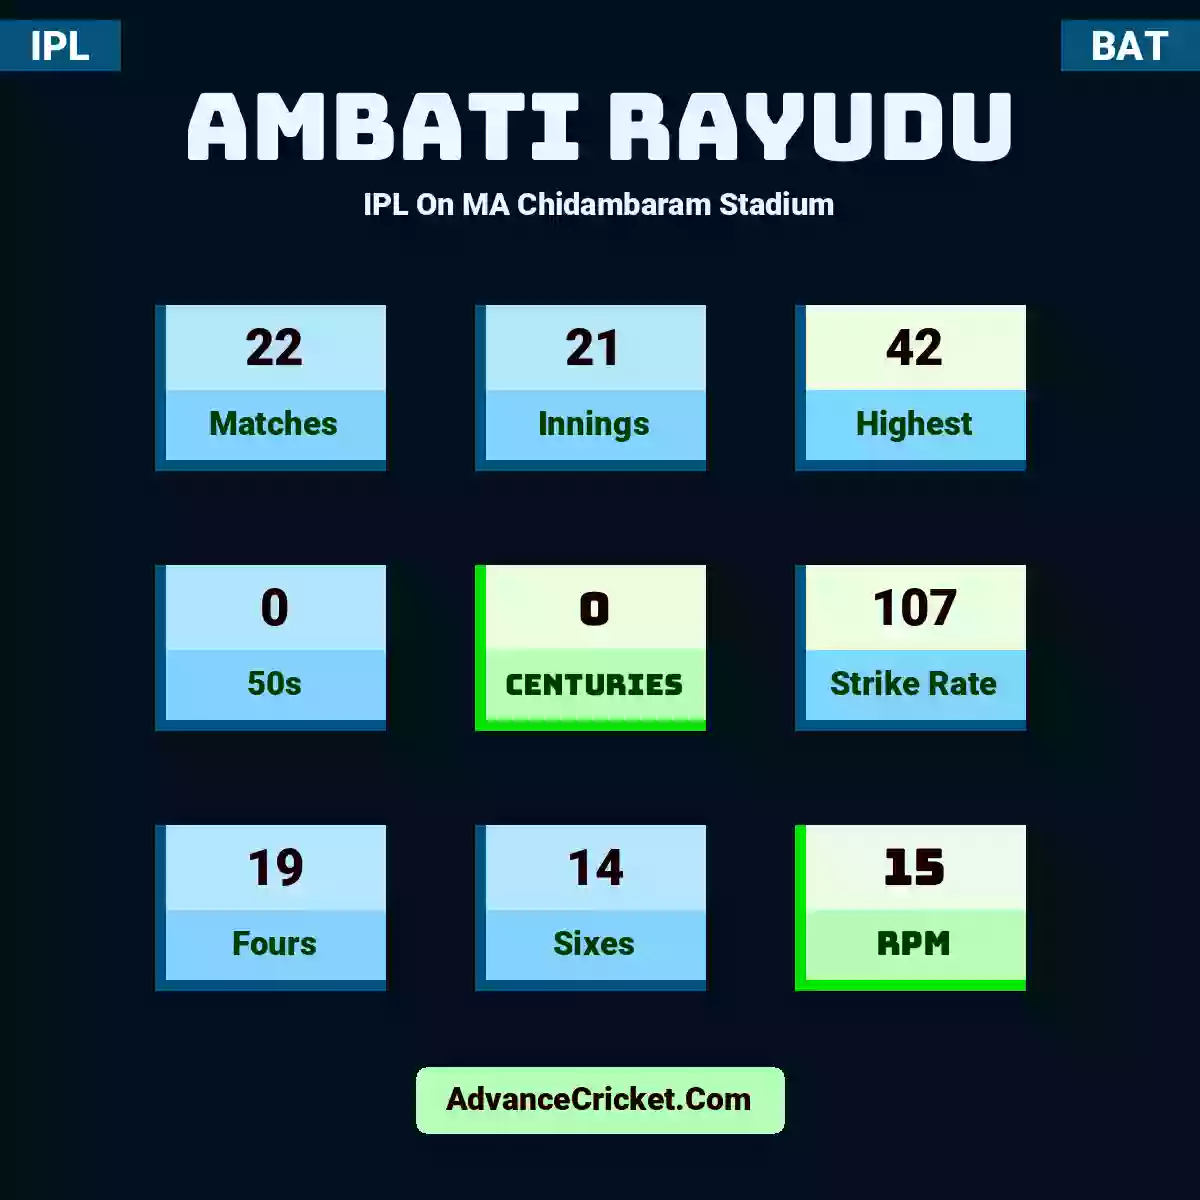 Ambati Rayudu IPL  On MA Chidambaram Stadium, Ambati Rayudu played 22 matches, scored 42 runs as highest, 0 half-centuries, and 0 centuries, with a strike rate of 107. A.Rayudu hit 19 fours and 14 sixes, with an RPM of 15.